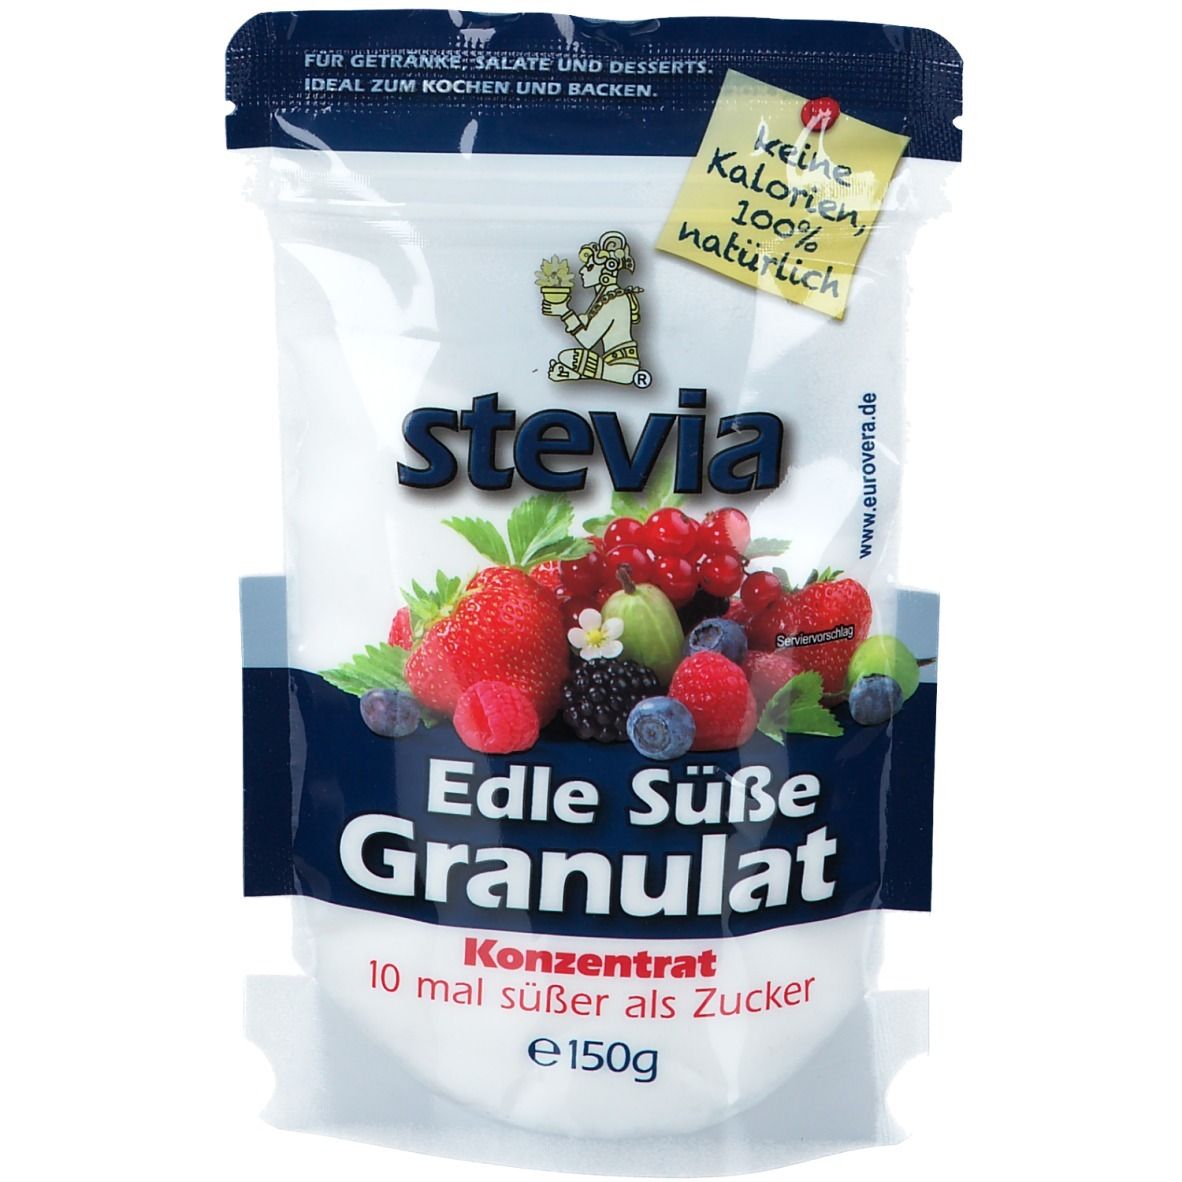 Stevia noble sweet granulate